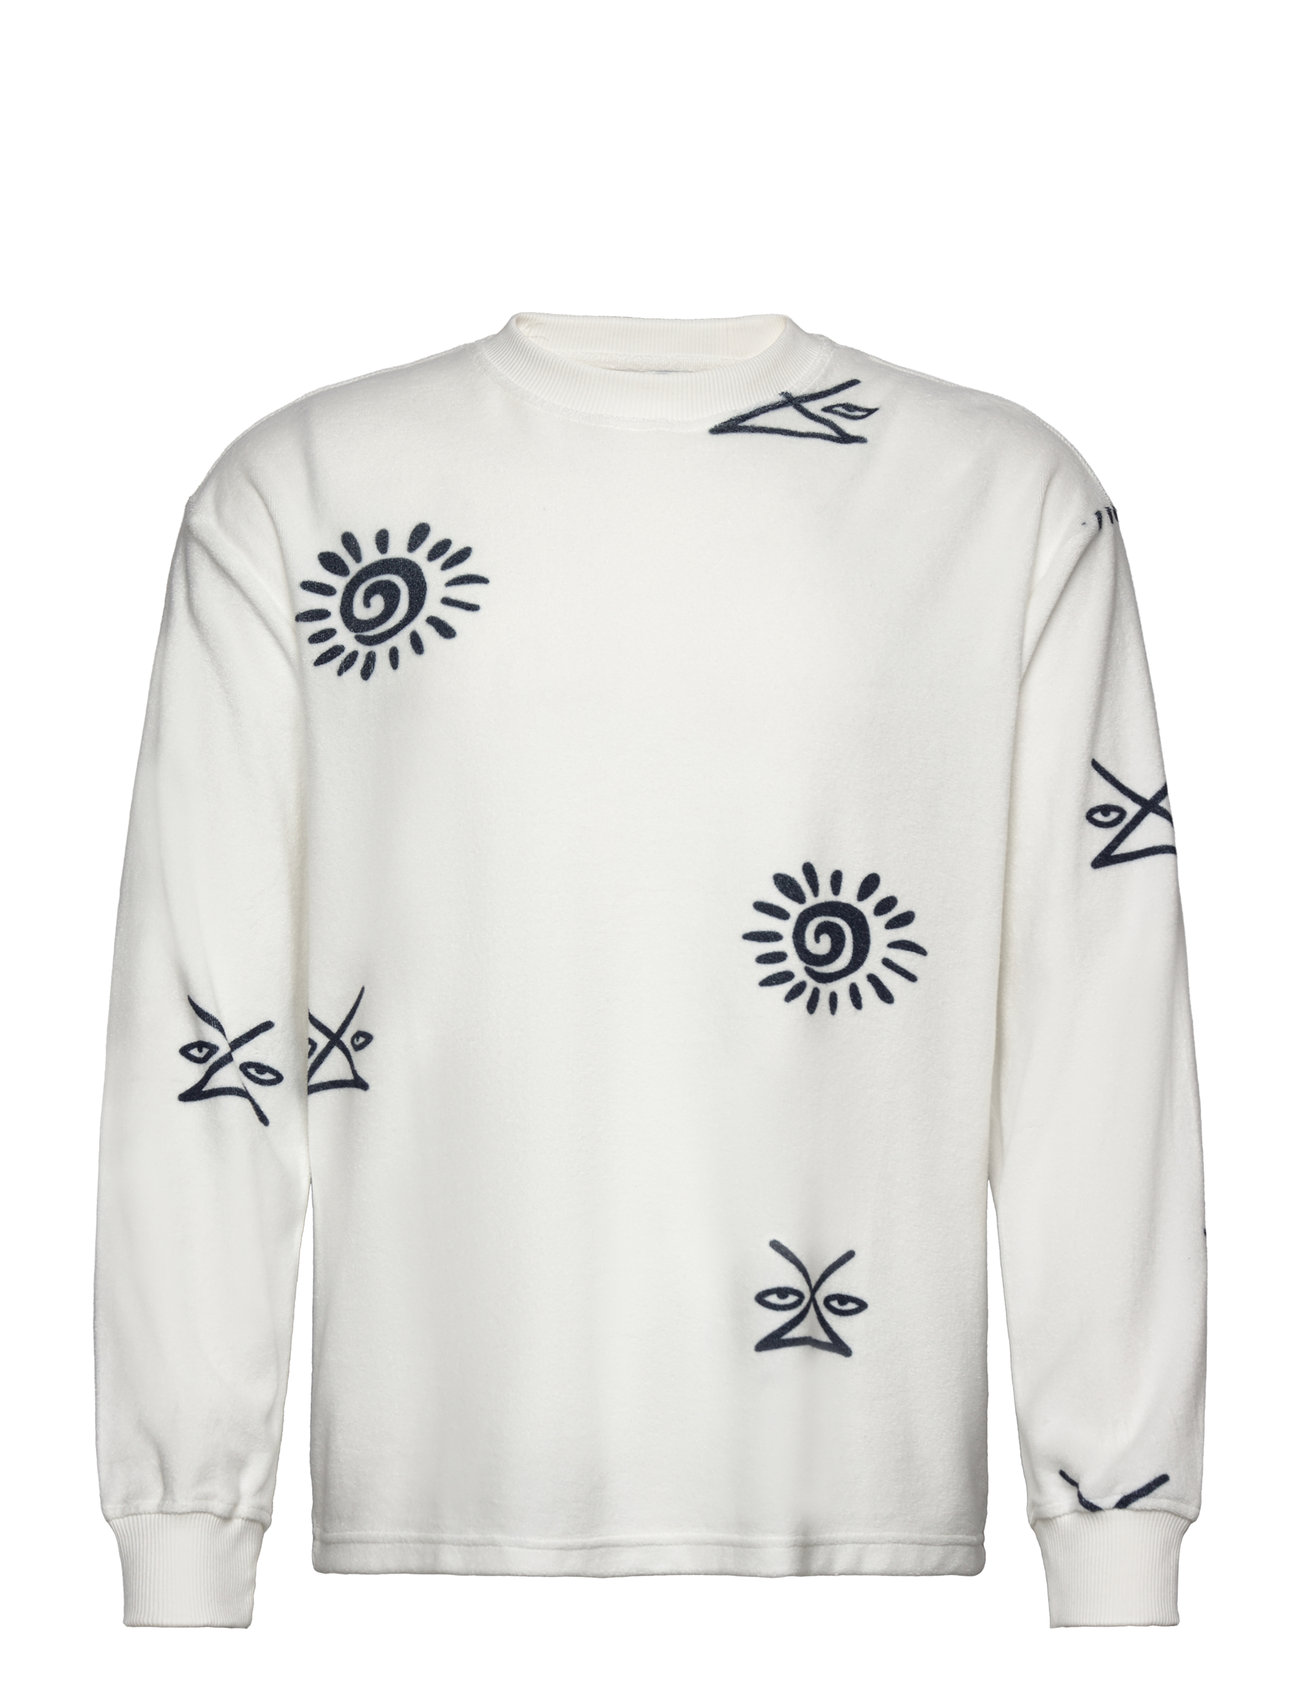 Hanes Hobo Ls Designers T-shirts Long-sleeved White Woodbird